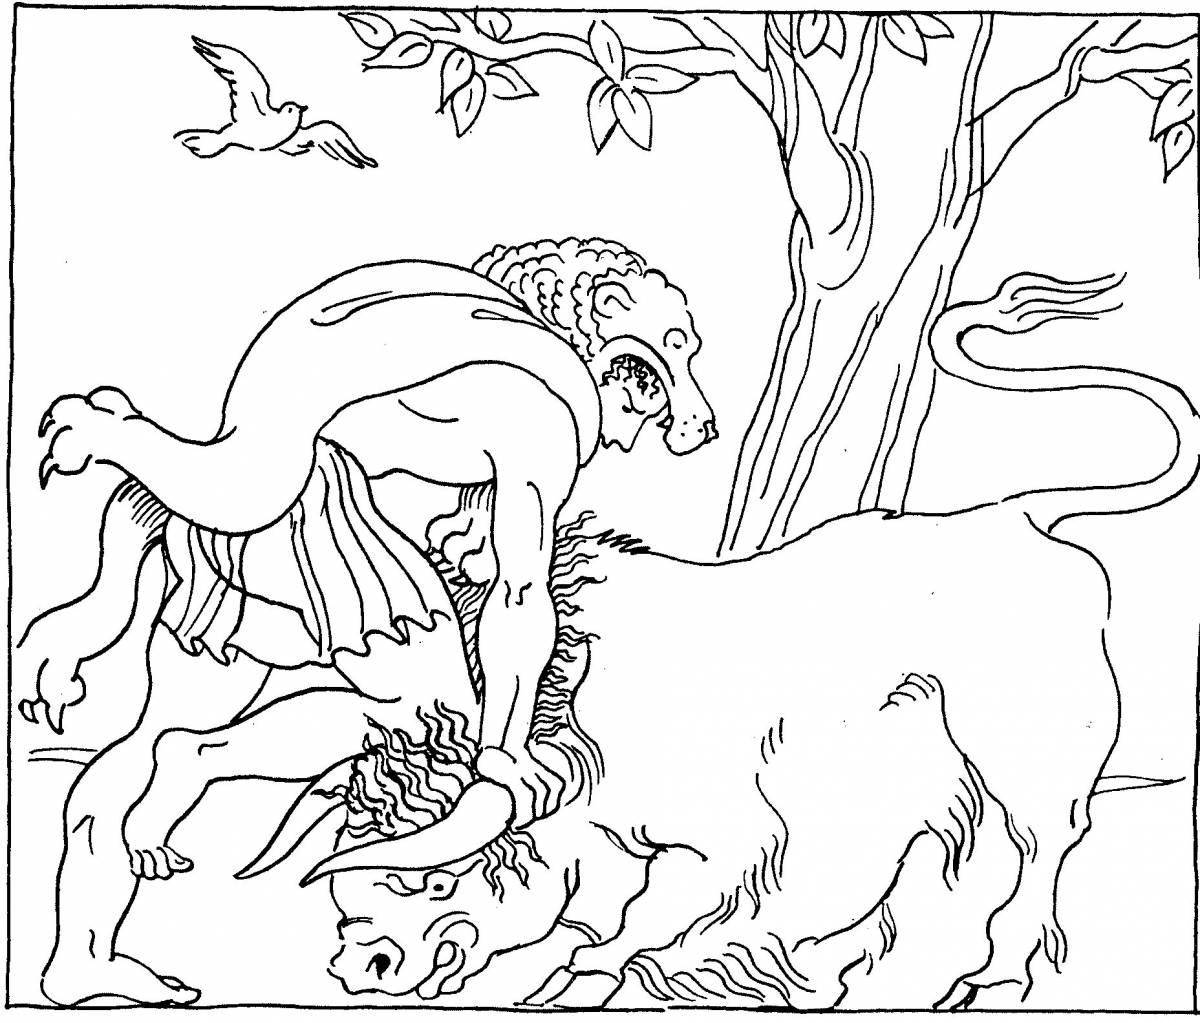 Impressive coloring of ancient Greek myths